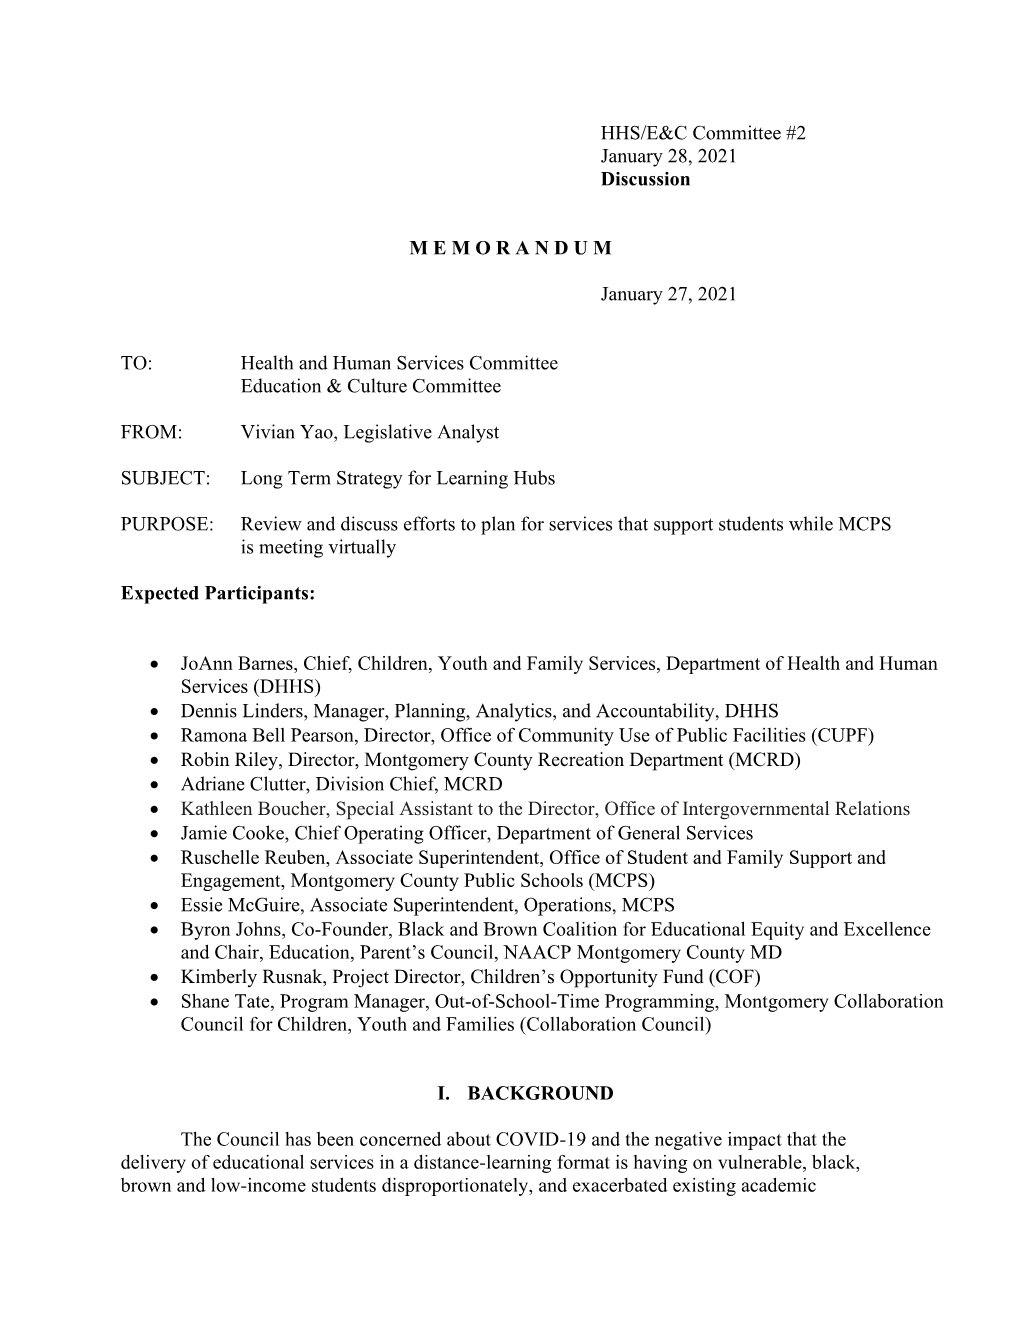 HHS/E&C Committee #2 January 28, 2021 Discussion MEMORANDUM